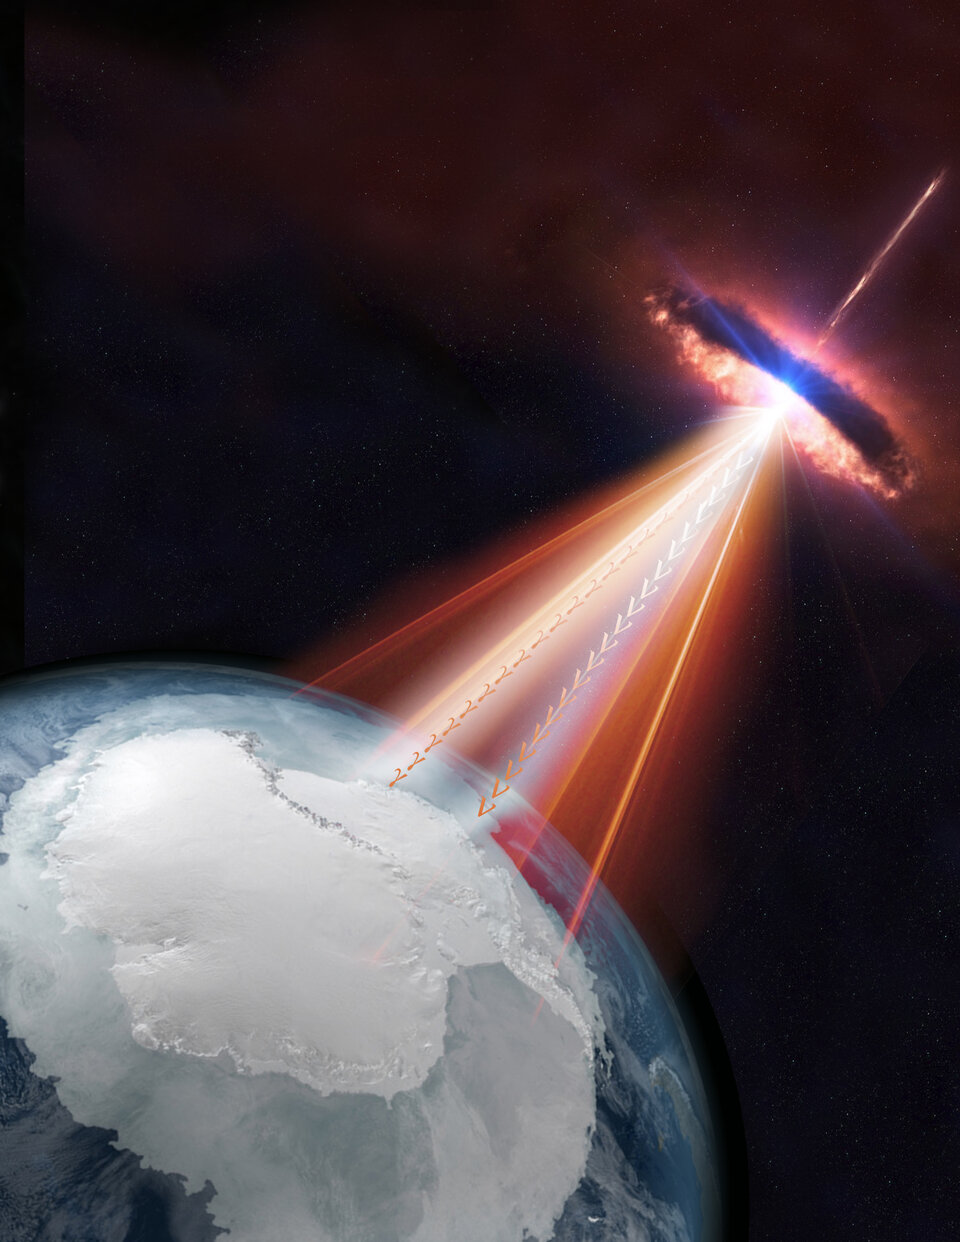 Gamma-ray-emitting celestrial object